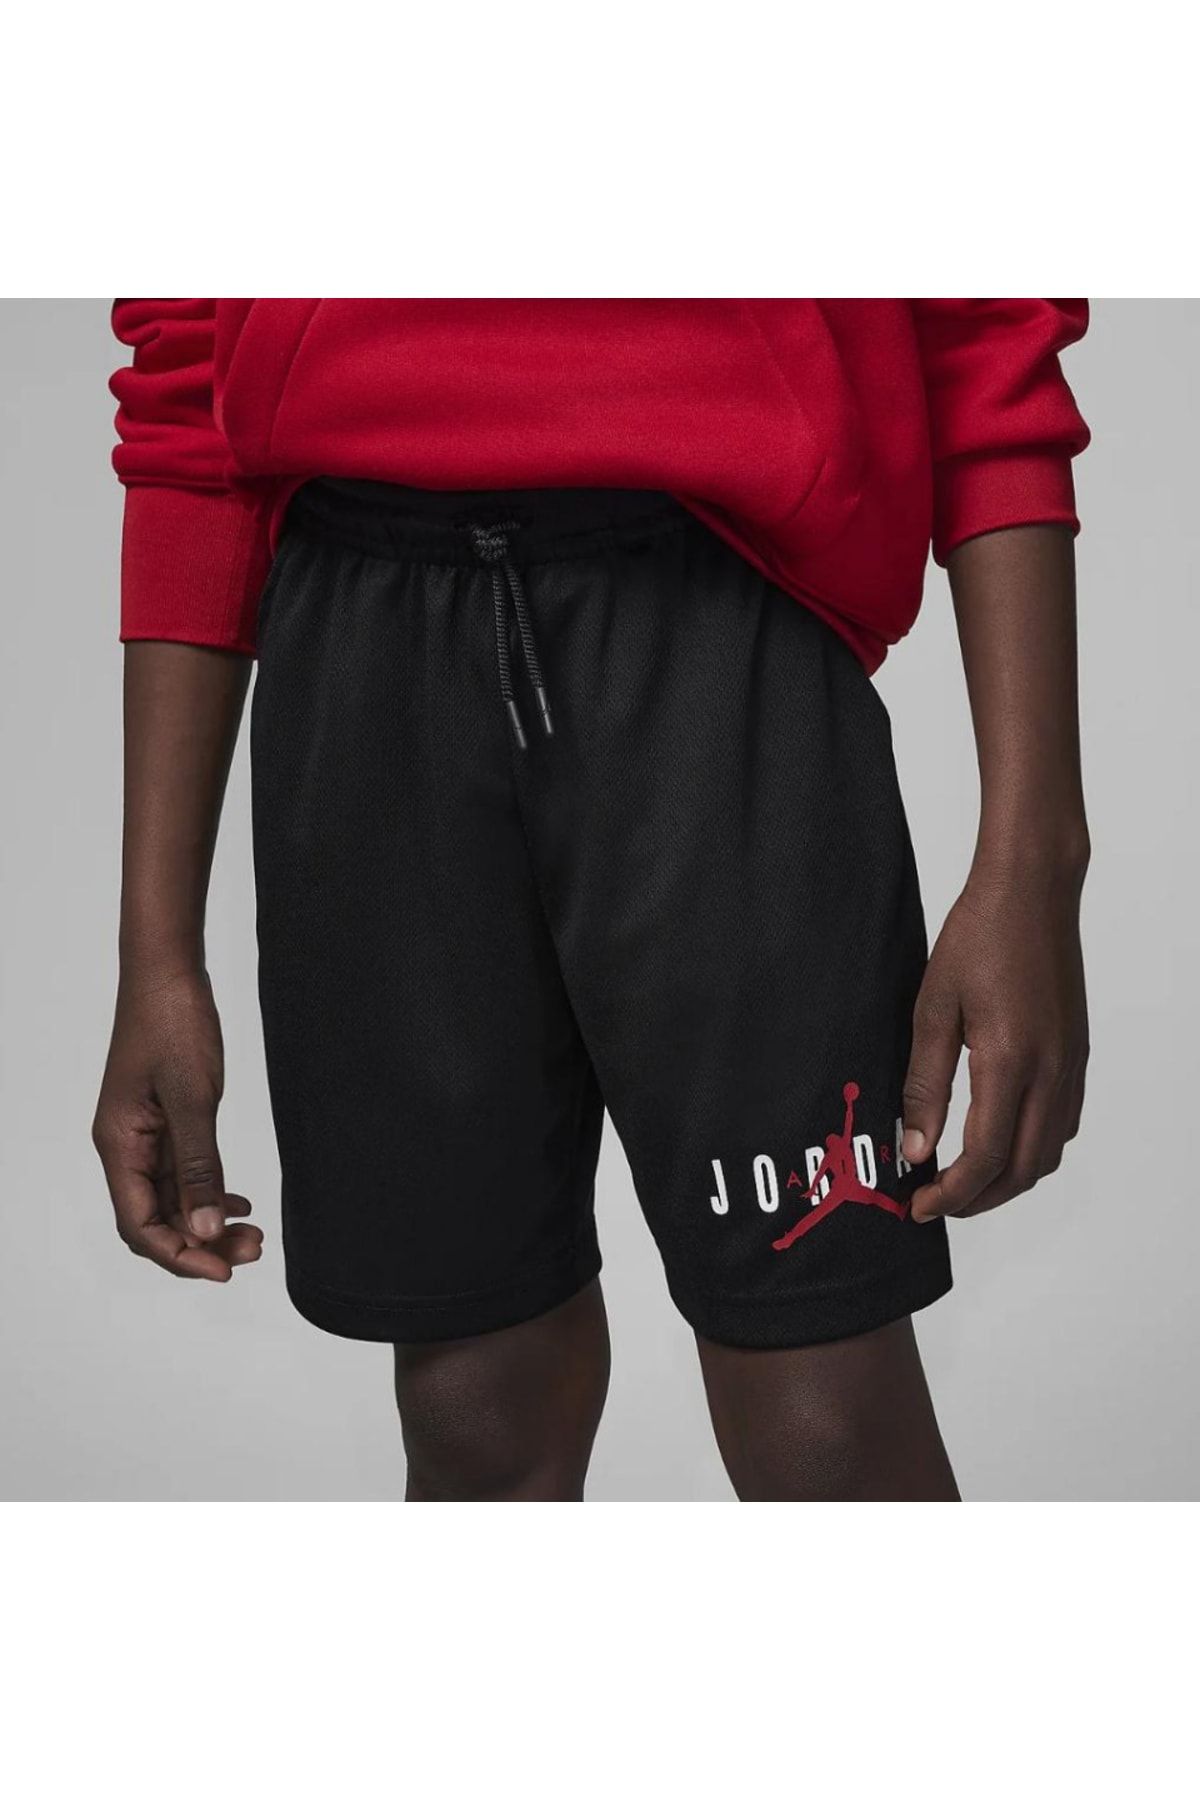 Nike Jordan Jdb Essentıals Graphıc Mesh Erkek Çocuk Şort 95c186-023